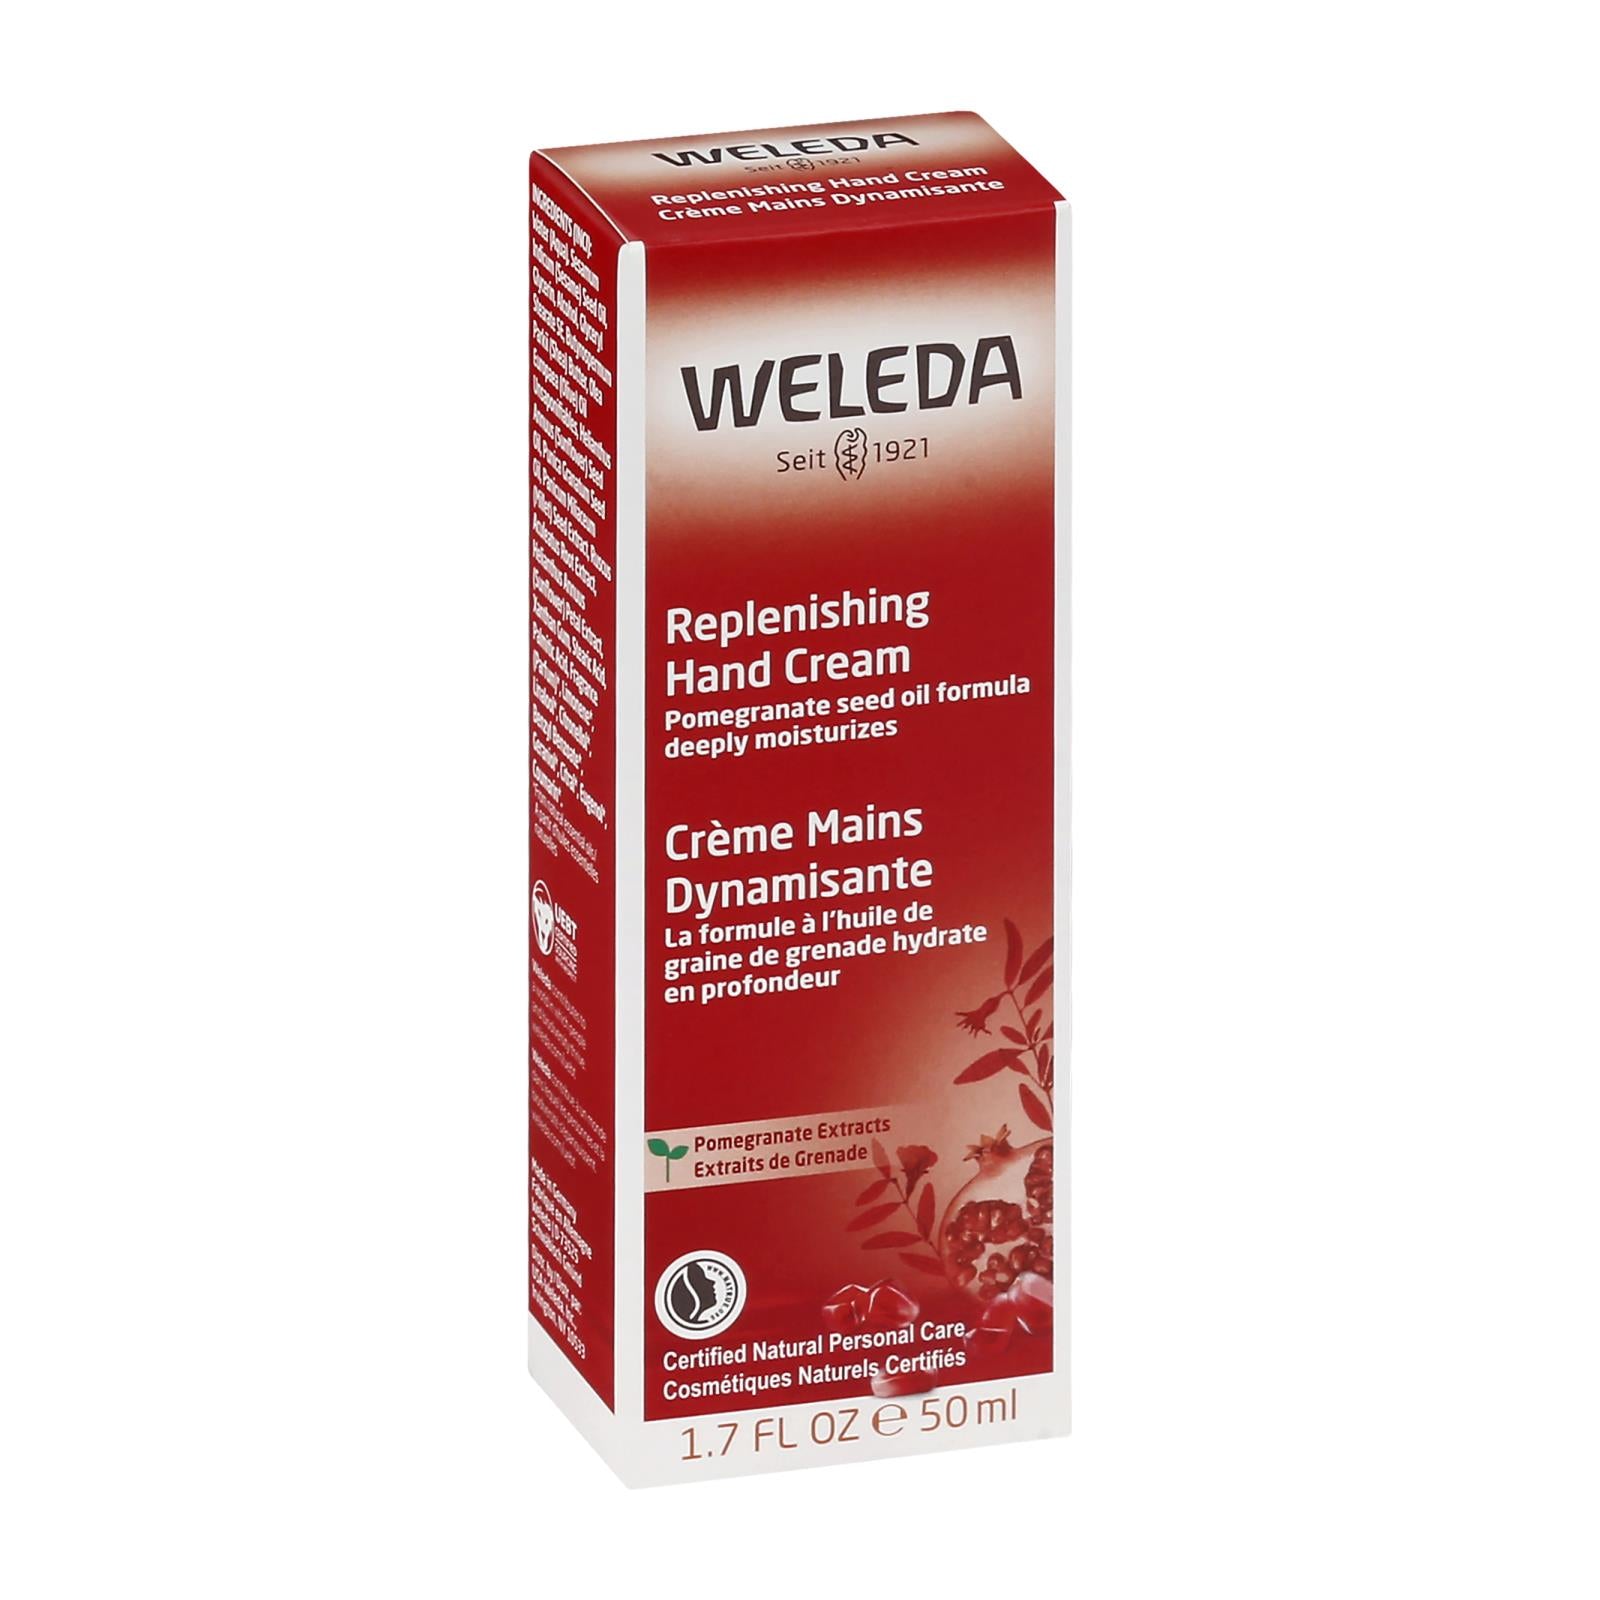 Weleda Regenerating Hand Cream Pomegranate - 1.7 Fl Oz